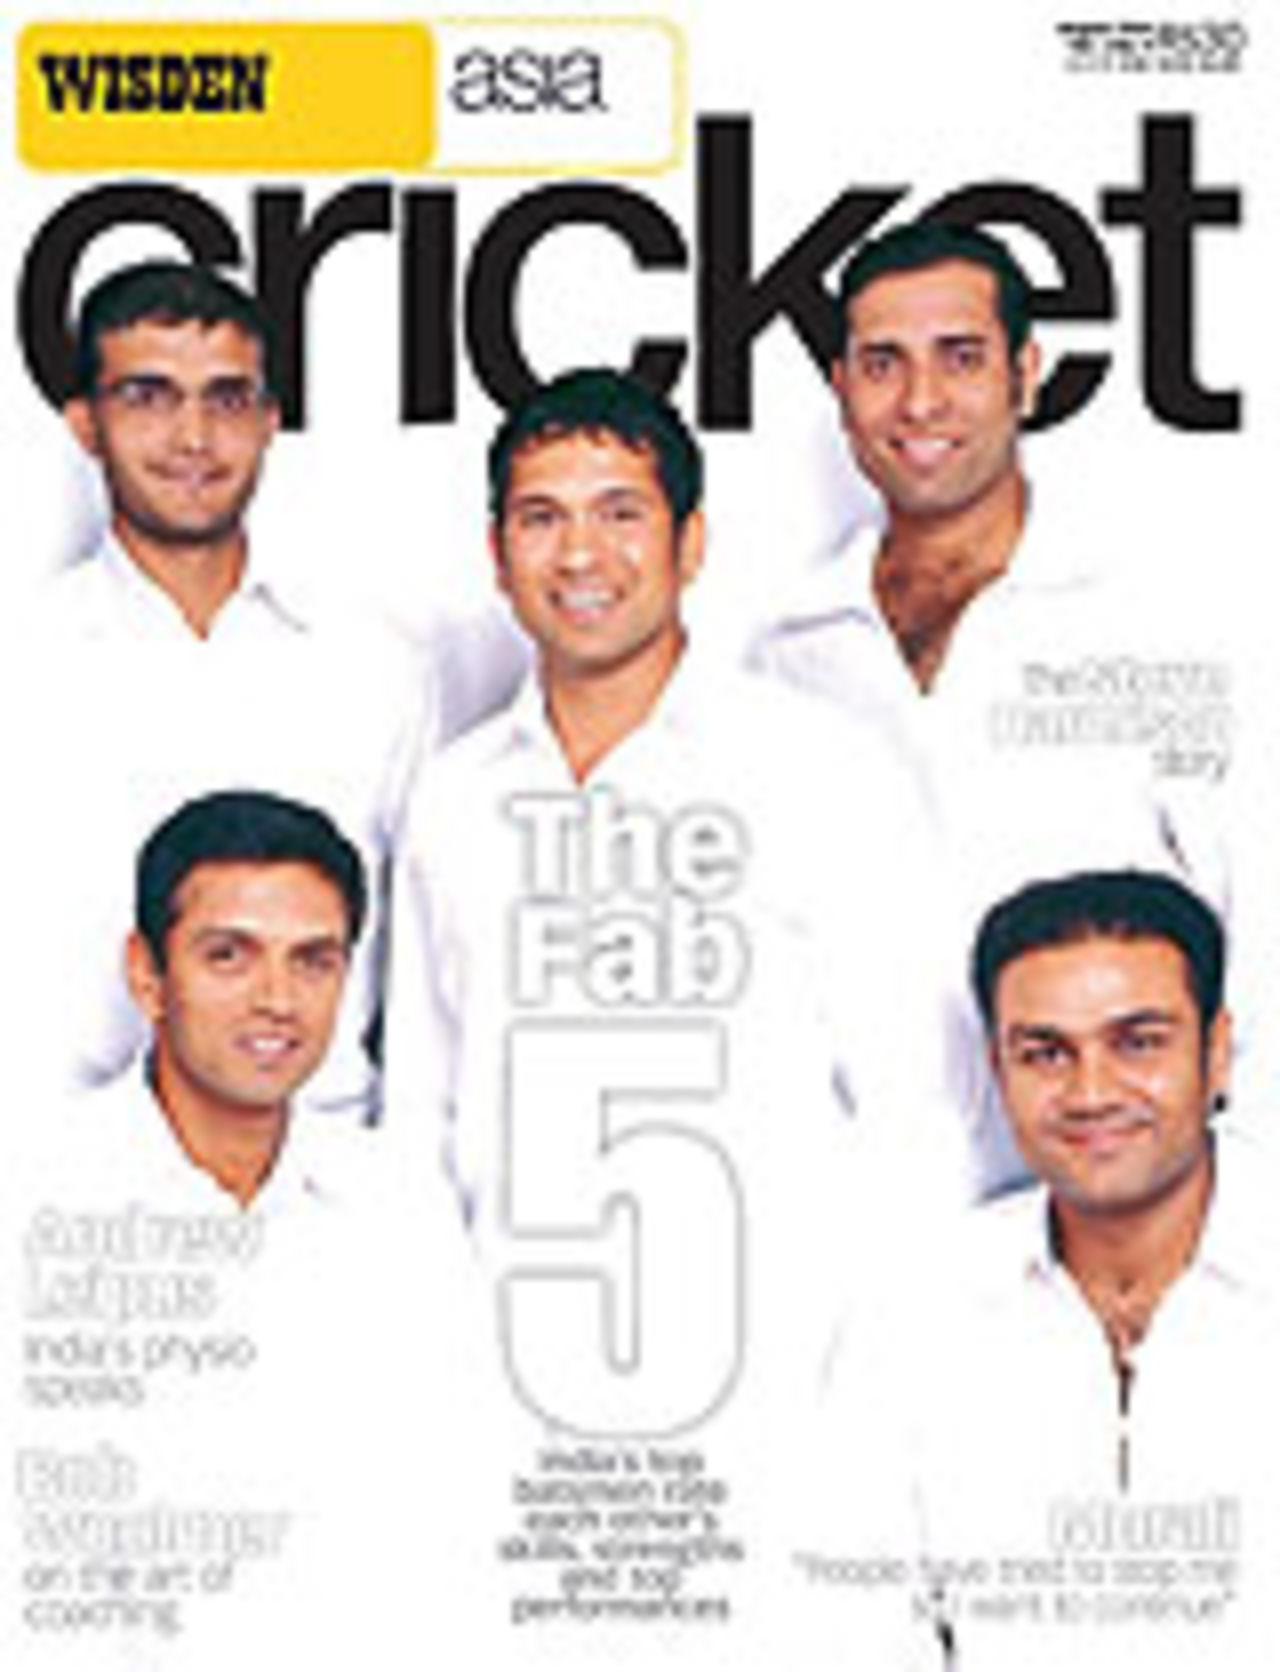 Wisden Asia Cricket cover, August, 2004